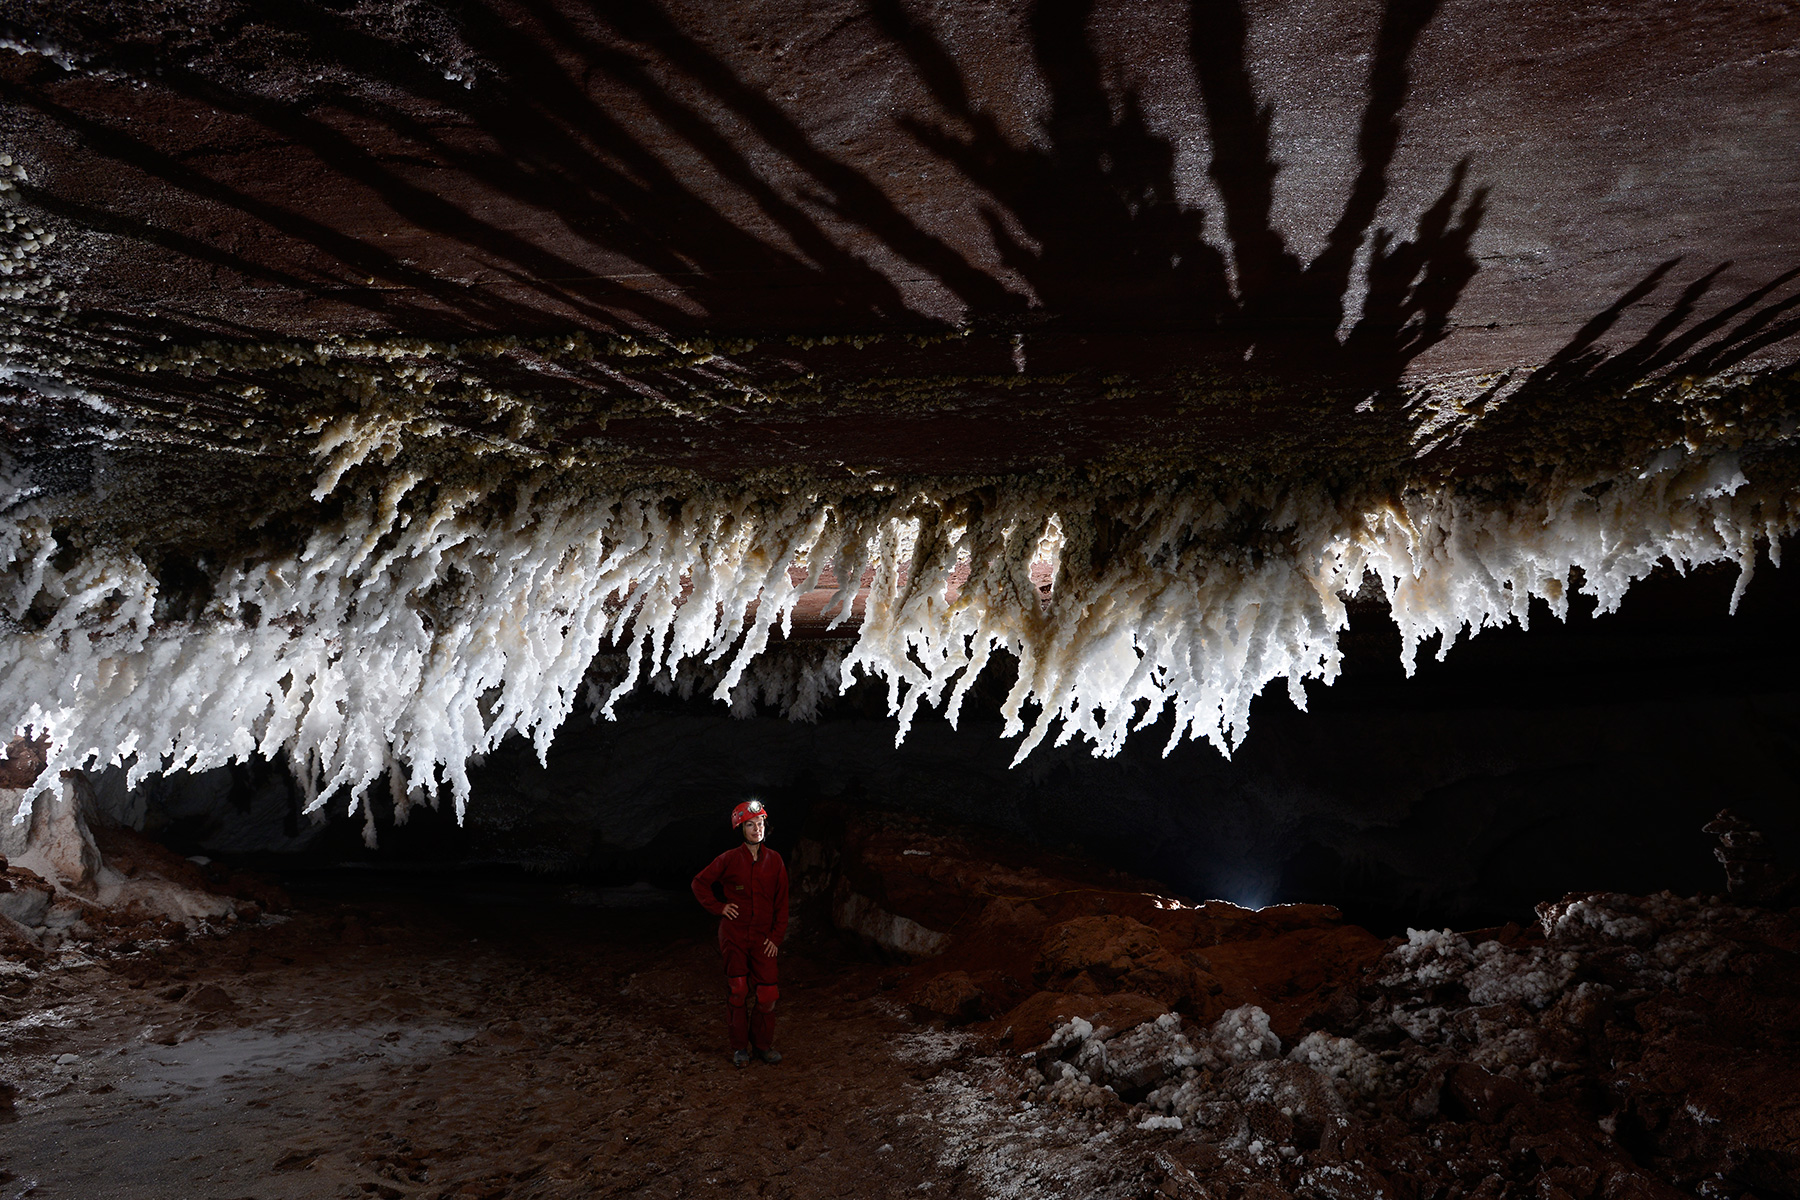 3N Cave(Namakdan, Qeshm, Iran) - Alignement de stalactites de sel dans une galerie